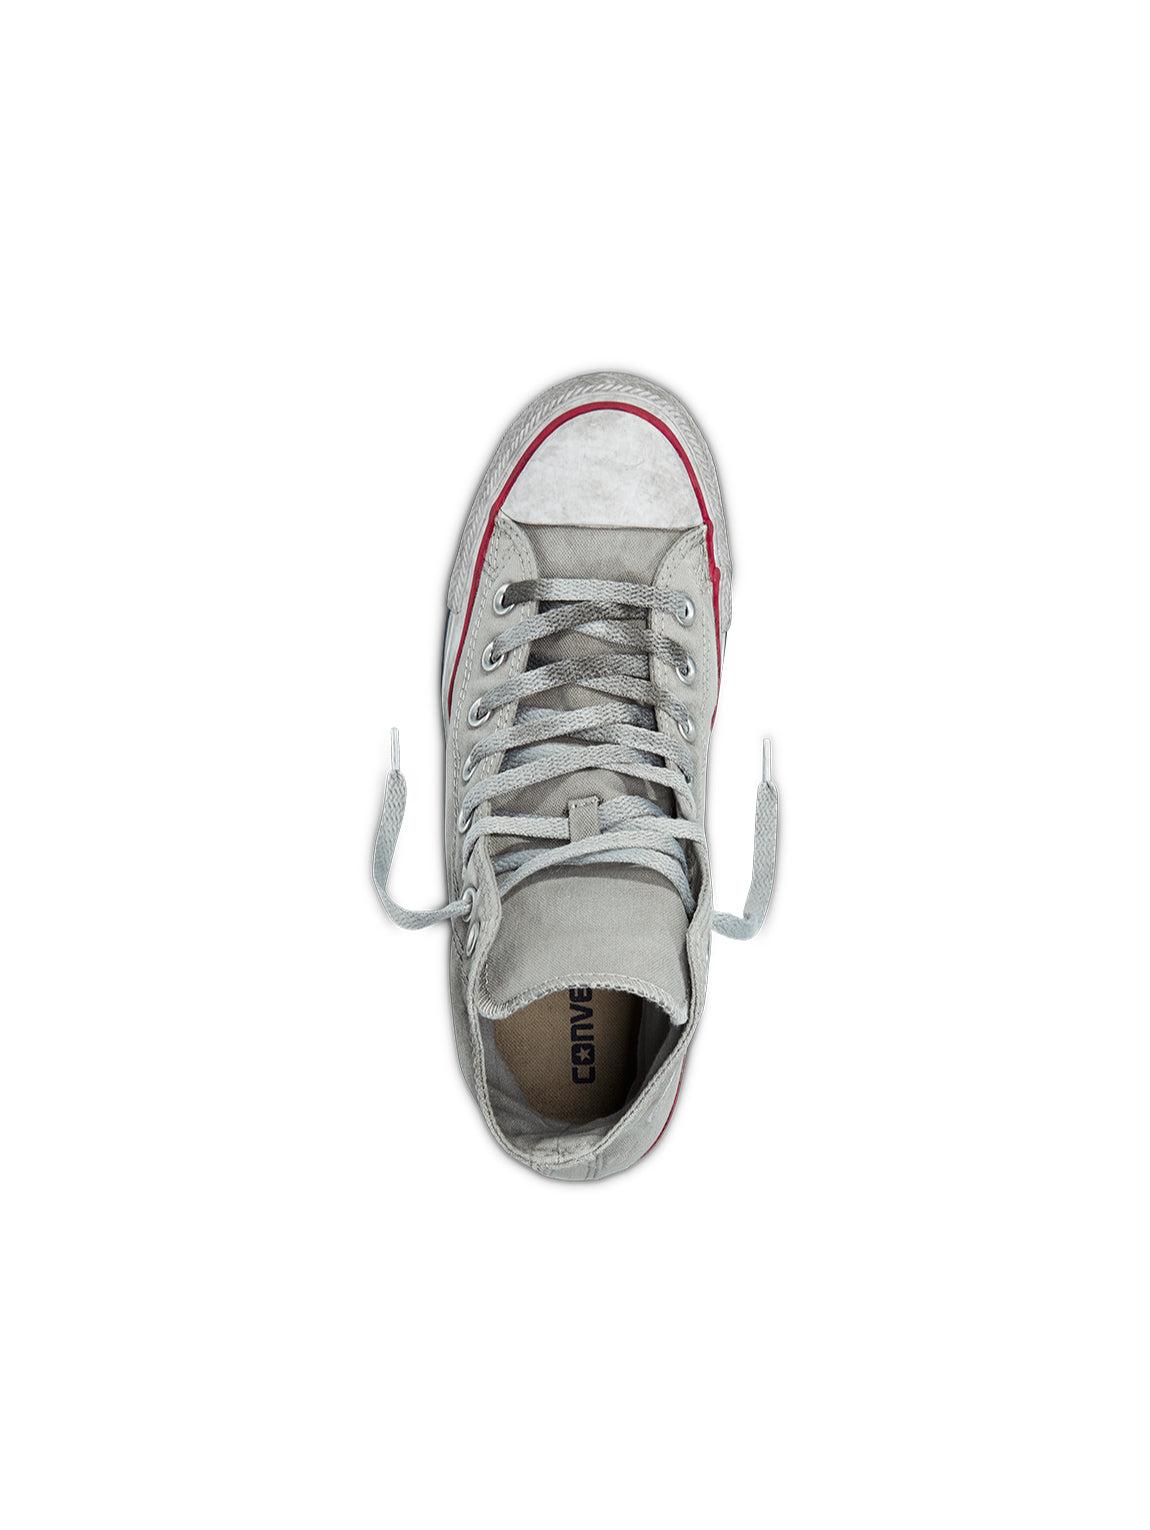 Converse Chuck Taylor All Star Canvas Smoke High Top Sneaker - Gray for Men  | Lyst